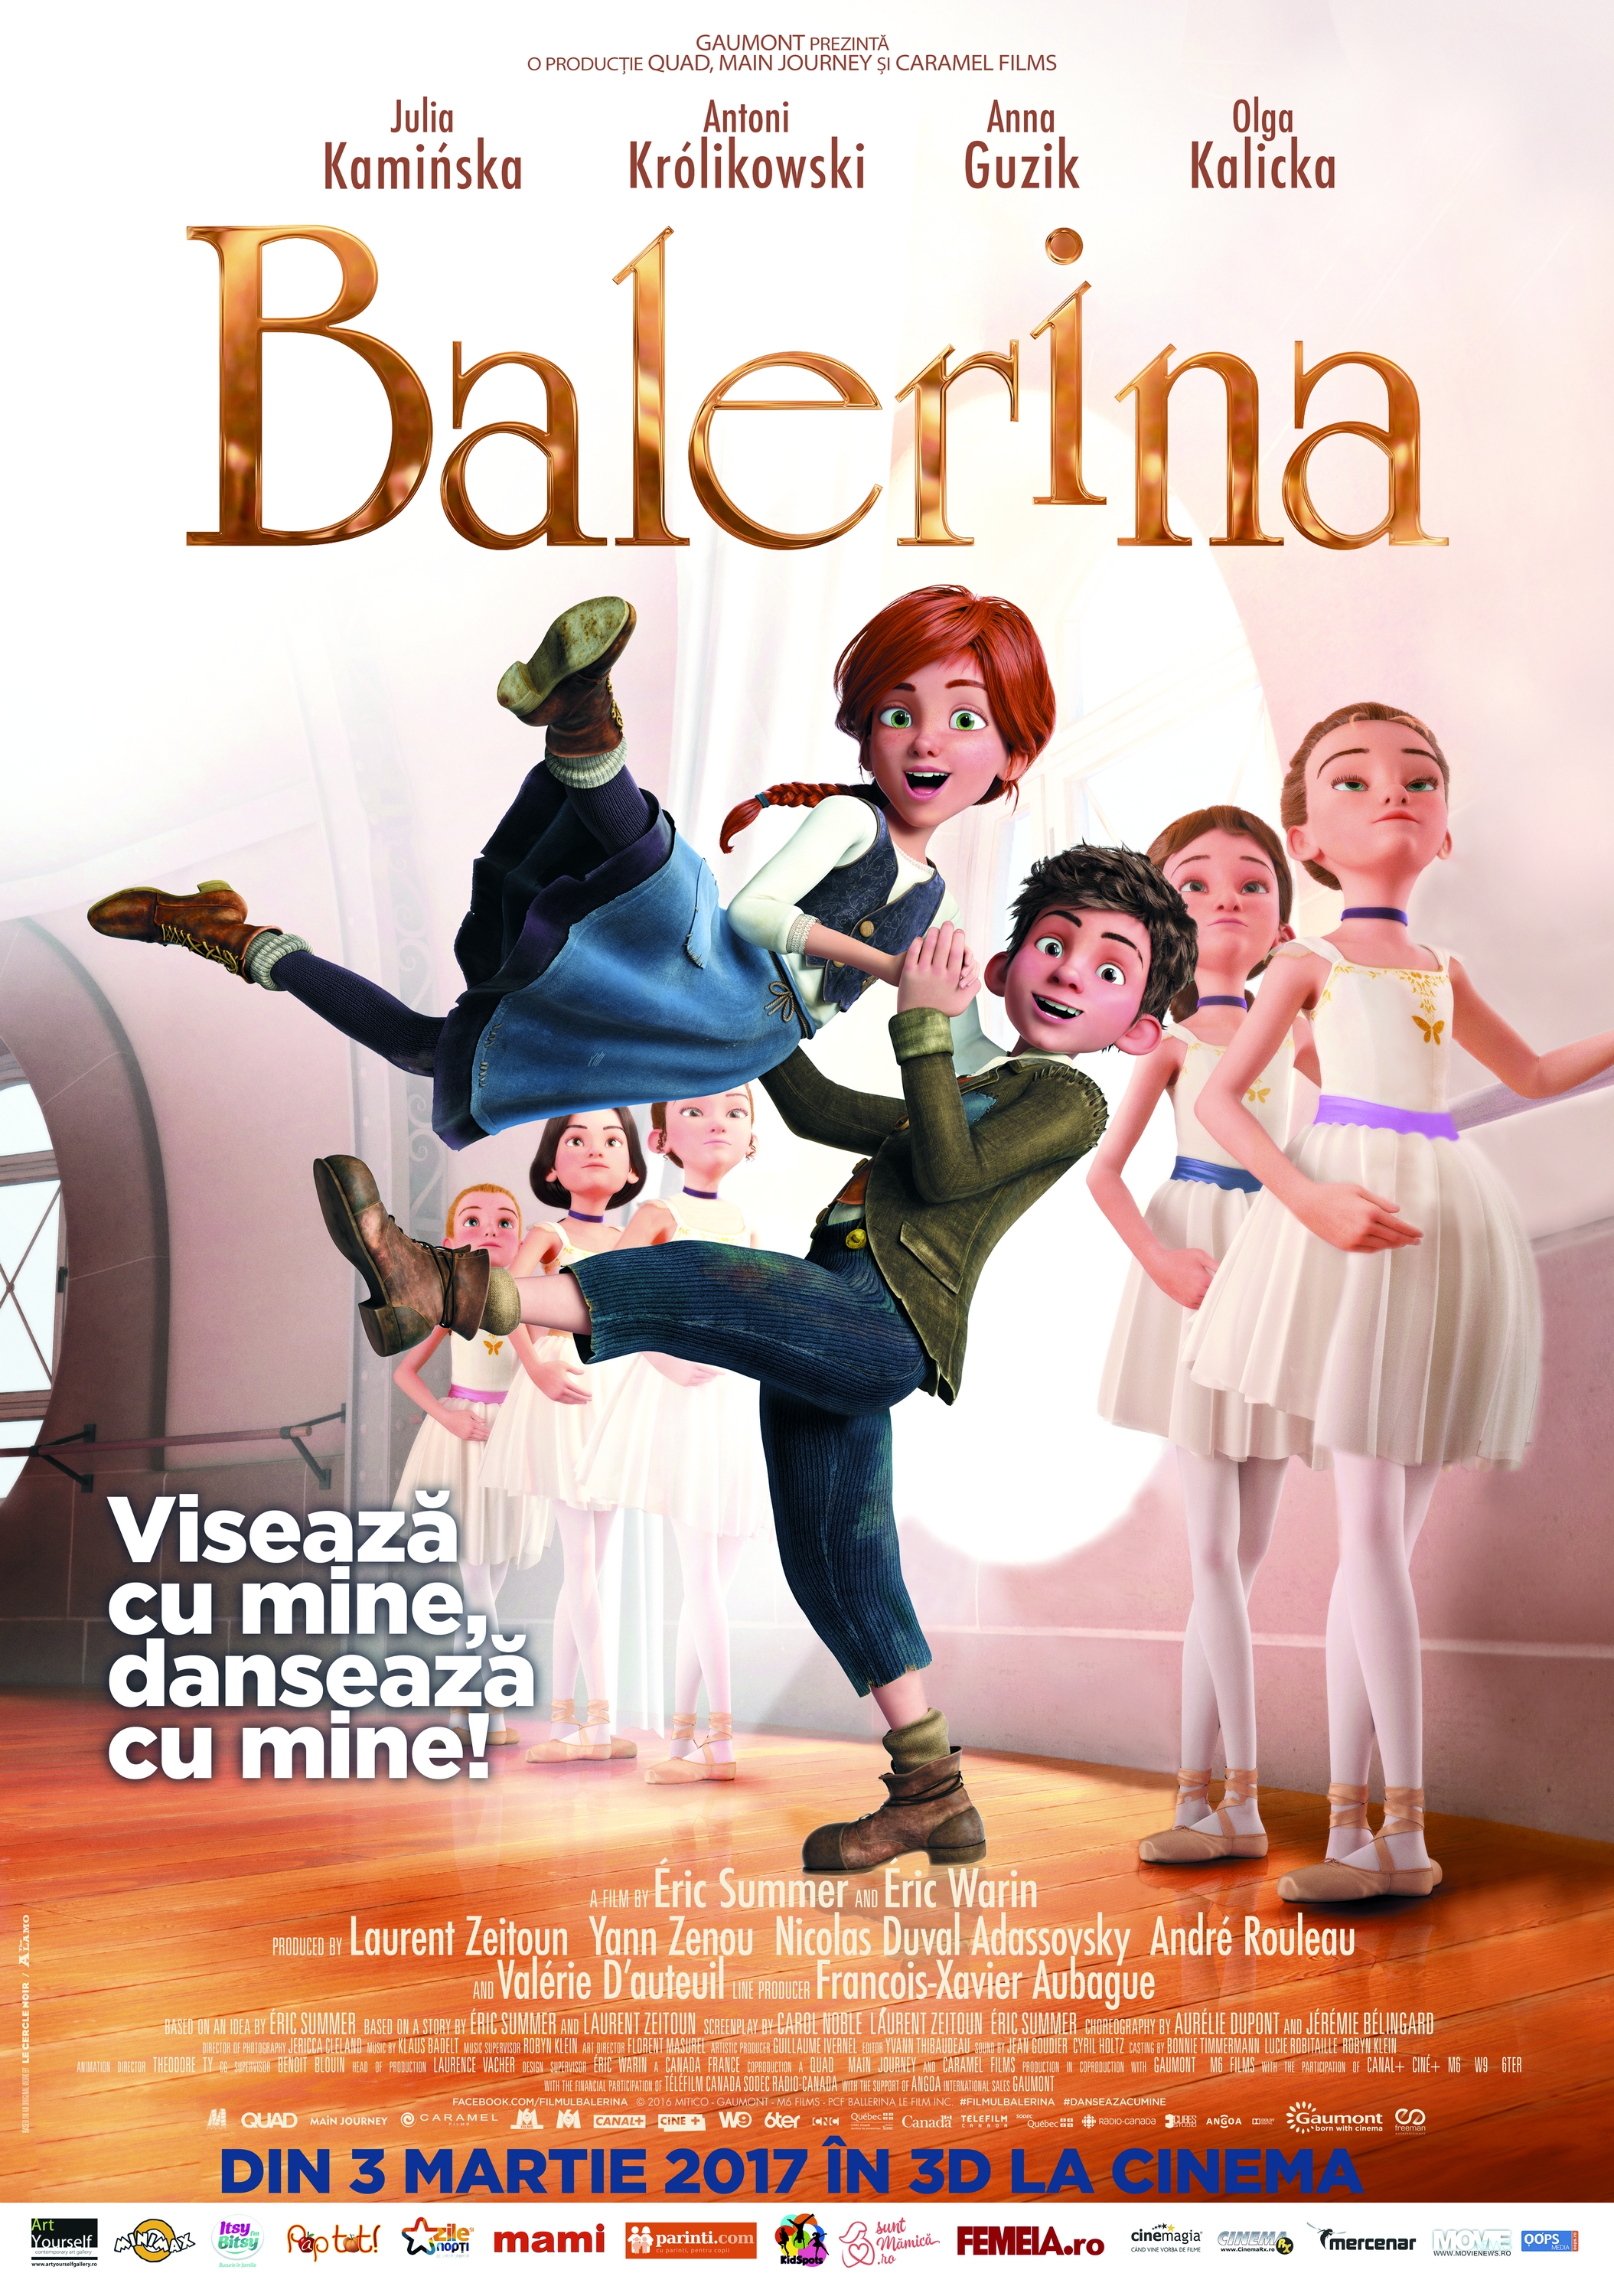 Ballerina Balerina (2016) - Film - CineMagia.ro